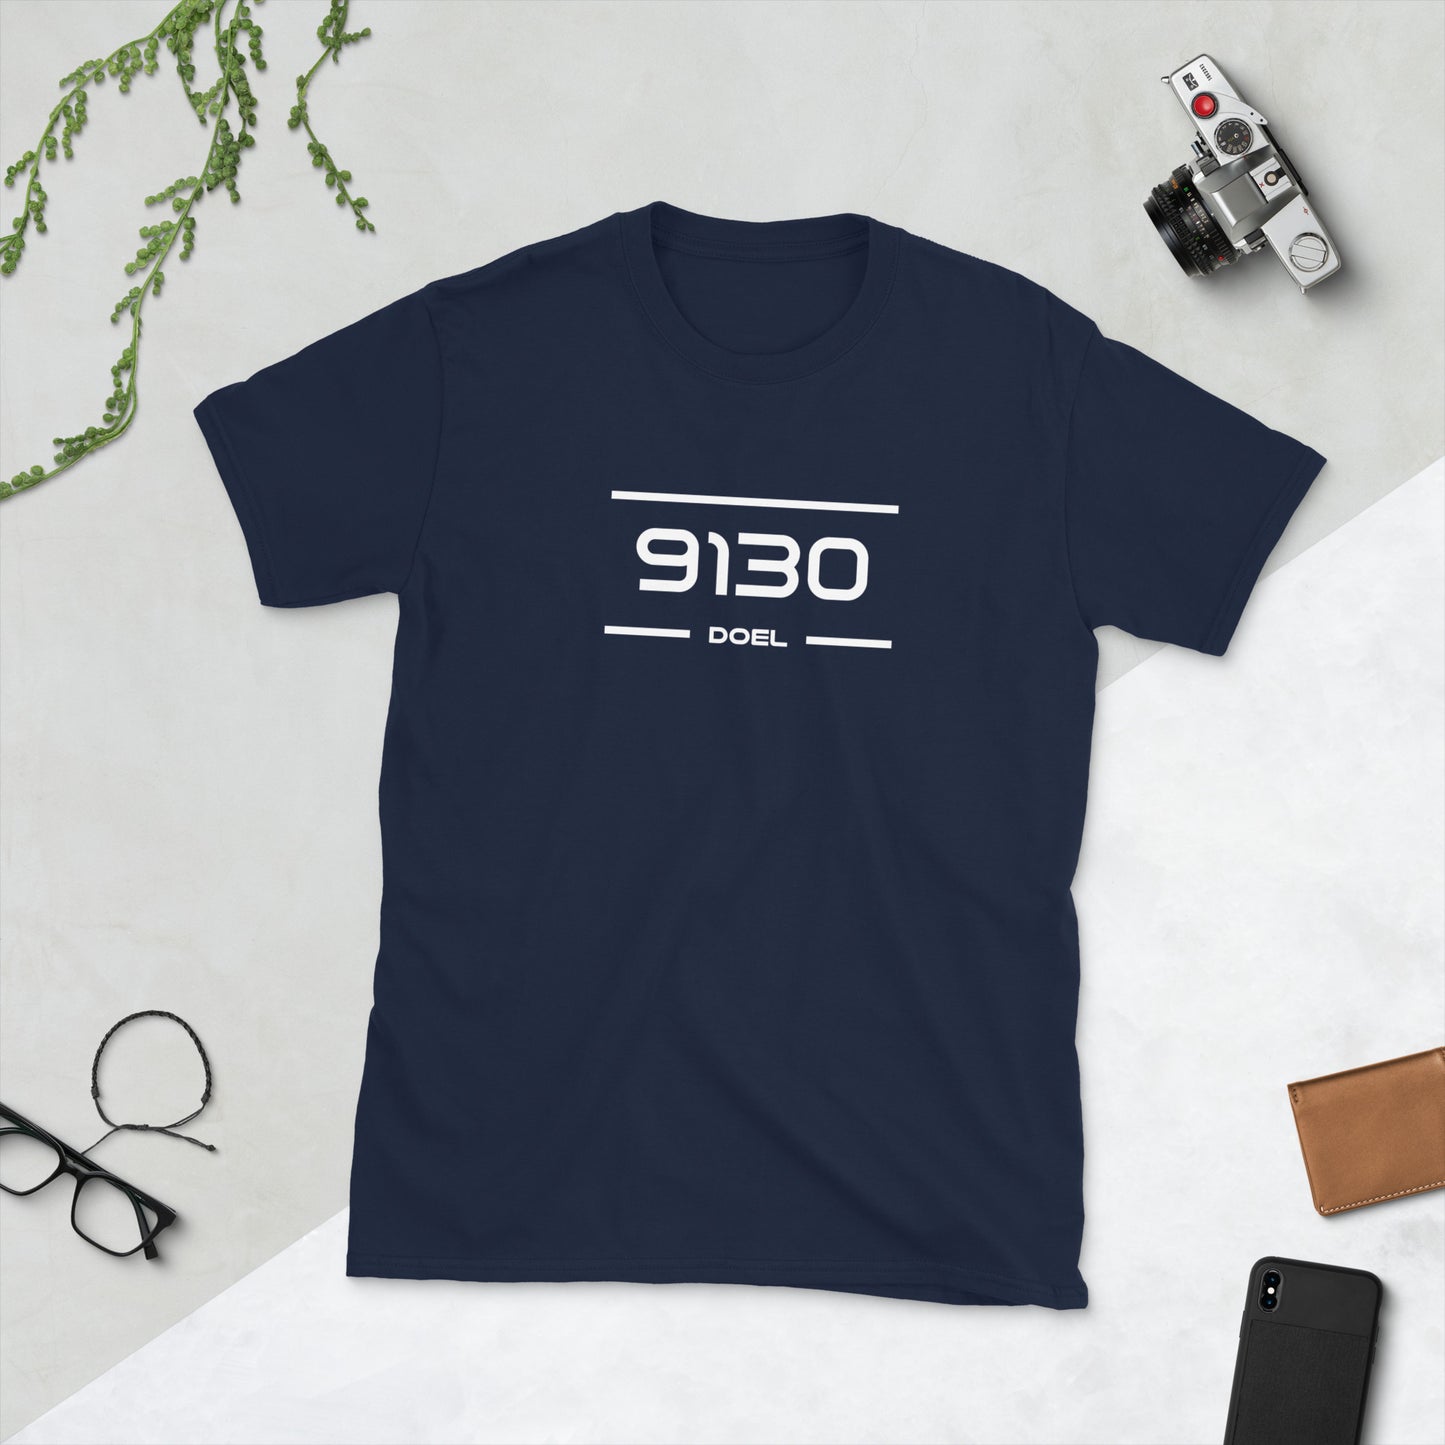 T-Shirt - 9130 - Doel